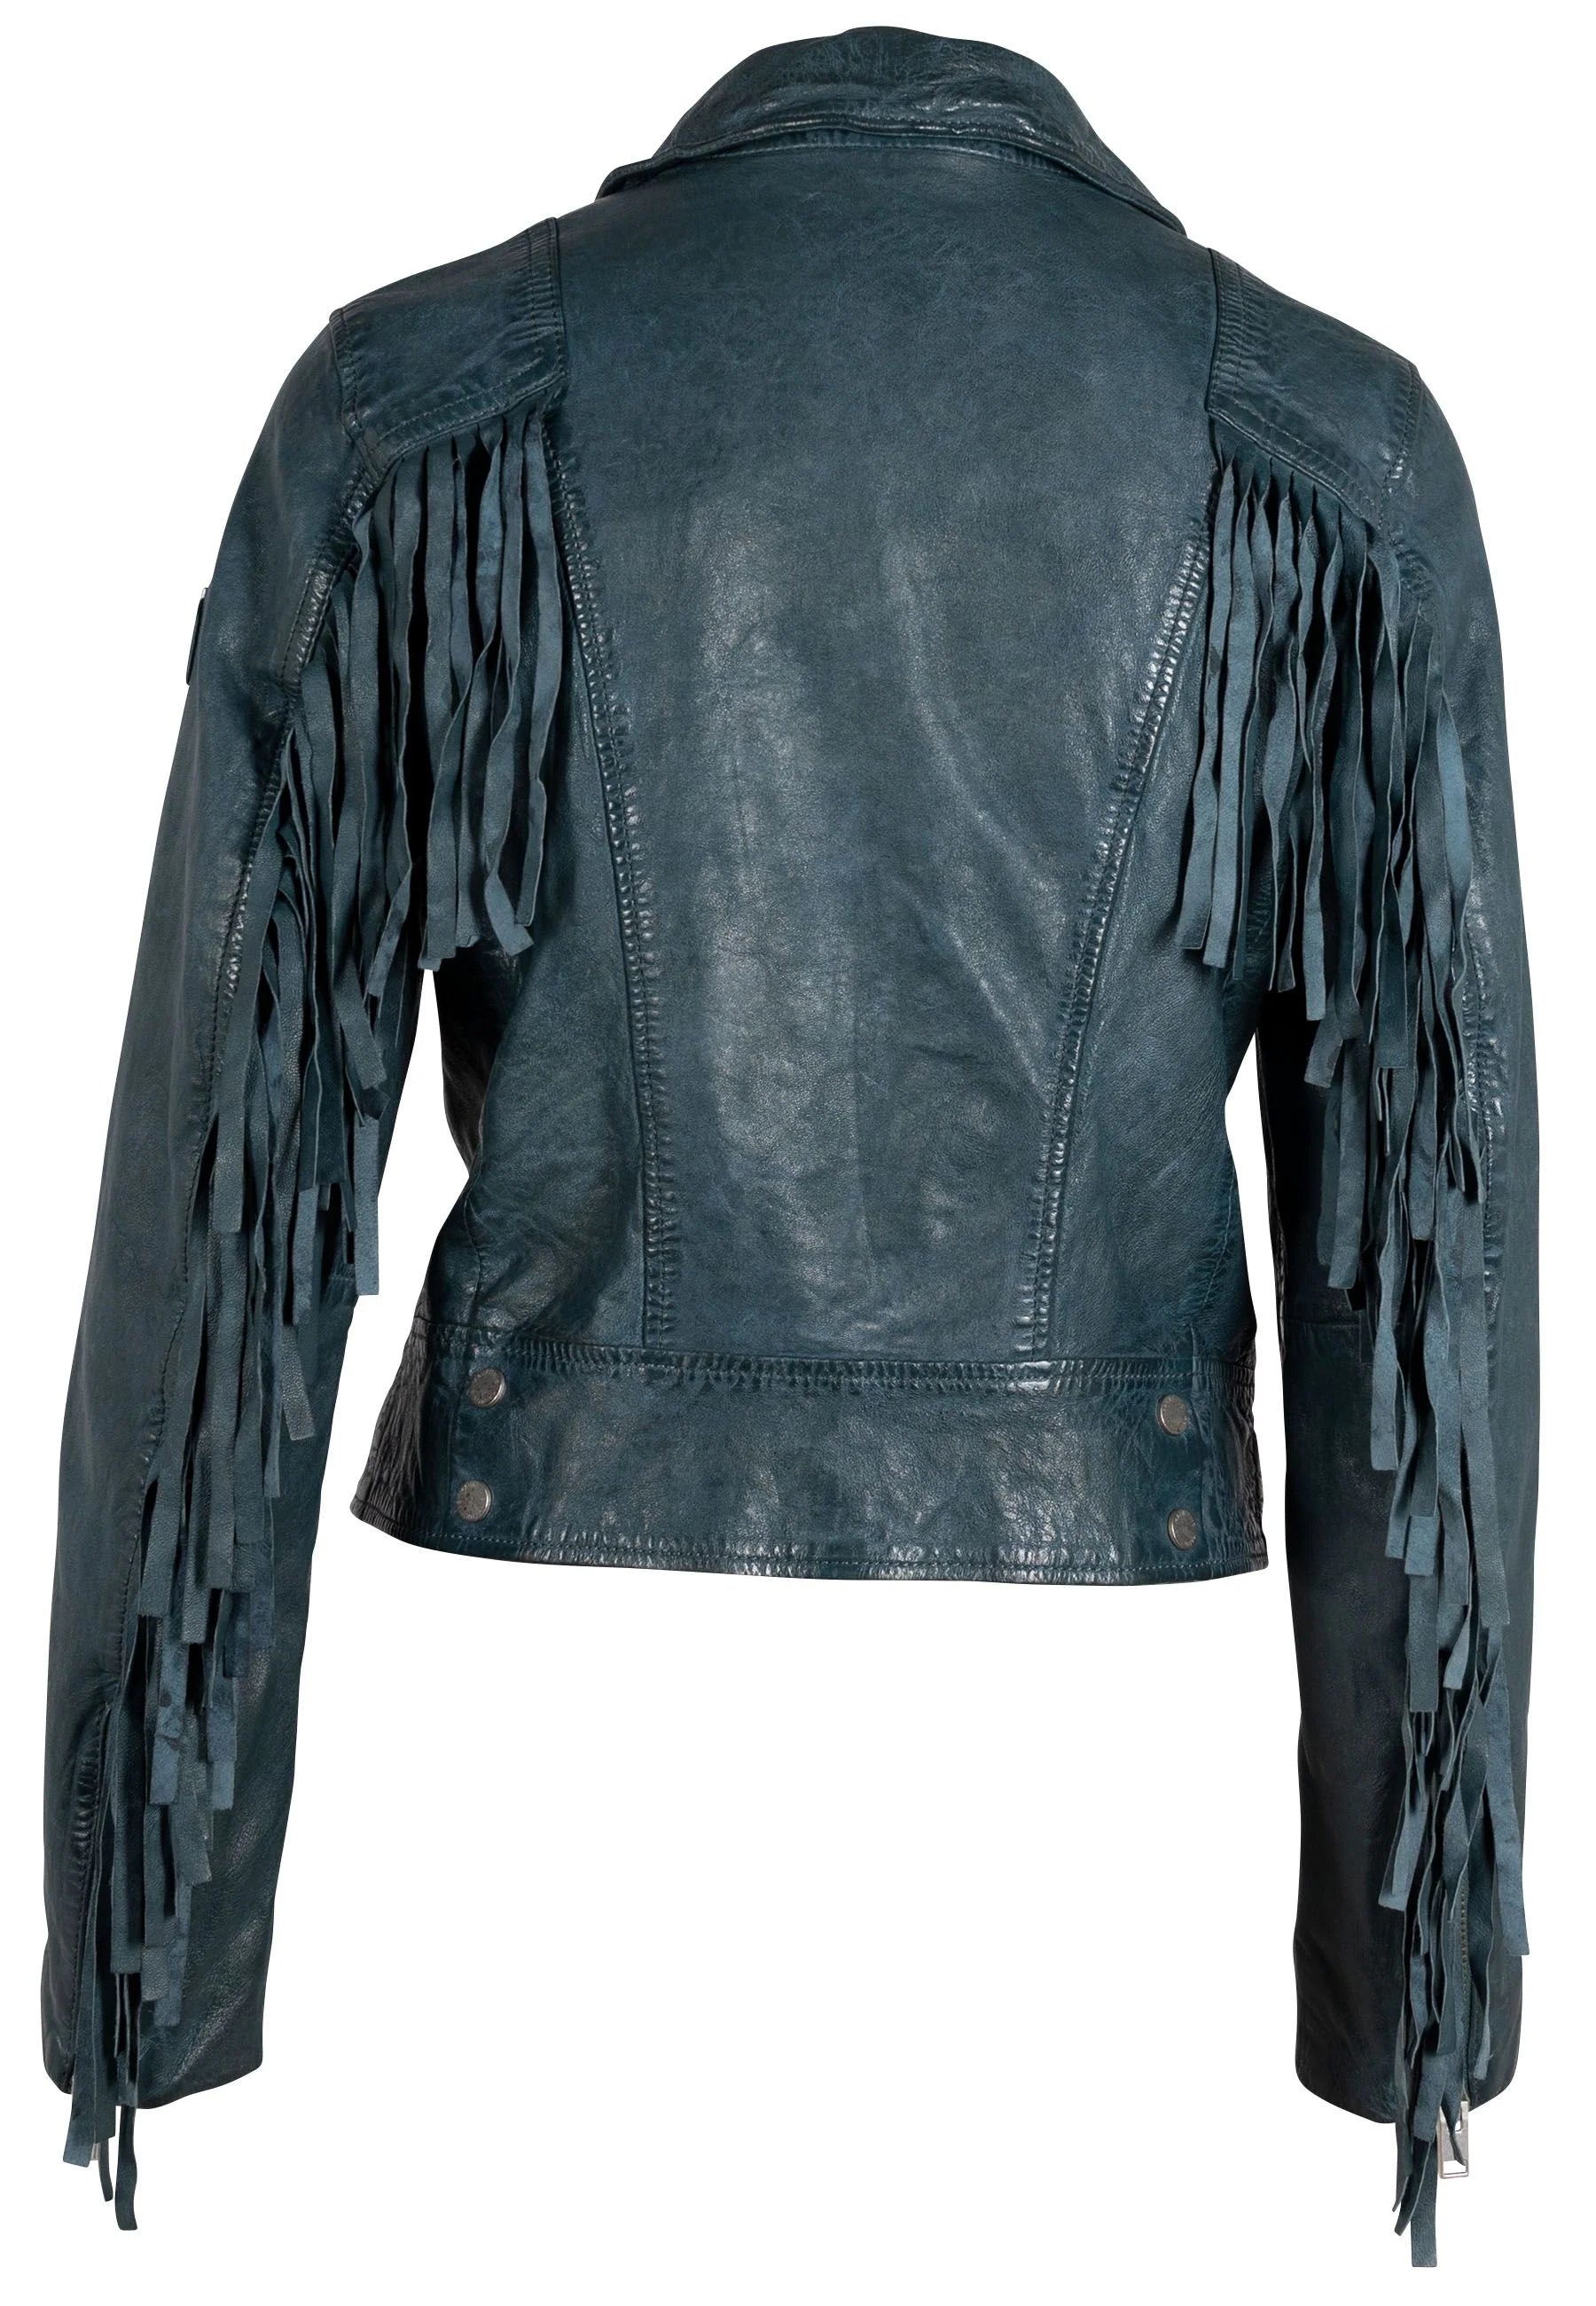 Mauritius - Women's Zoe Leather Jacket - Teal